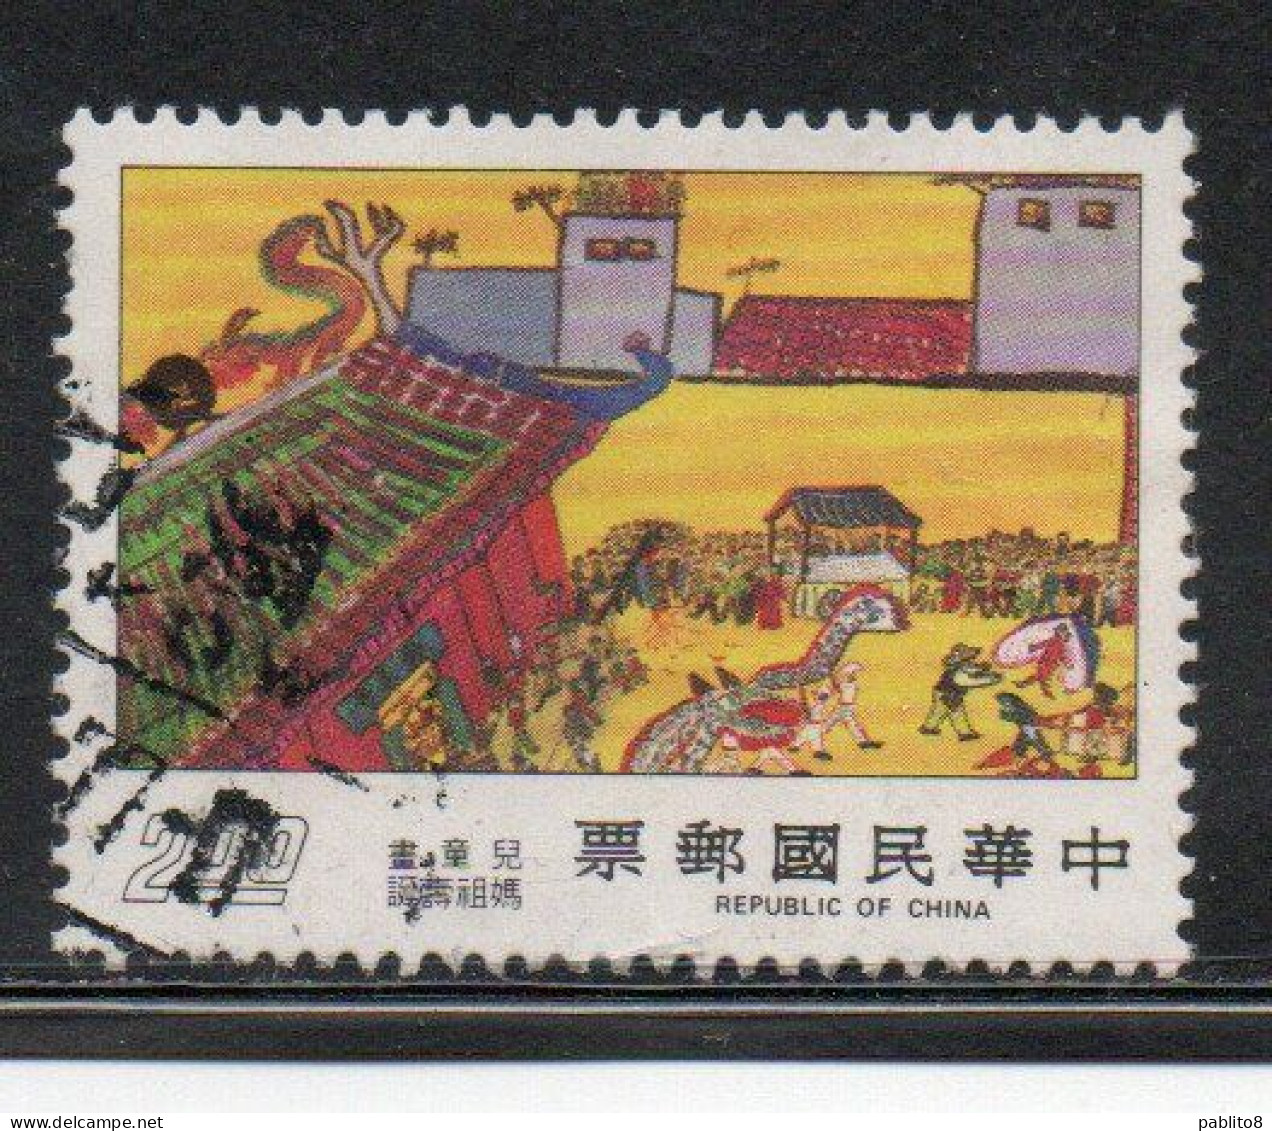 CHINA REPUBLIC CINA TAIWAN FORMOSA 1977 CHILDREN'S DRAWINGS SEA GODDESS FESTIVAL 2$ USED USATO OBLITERE' - Gebruikt